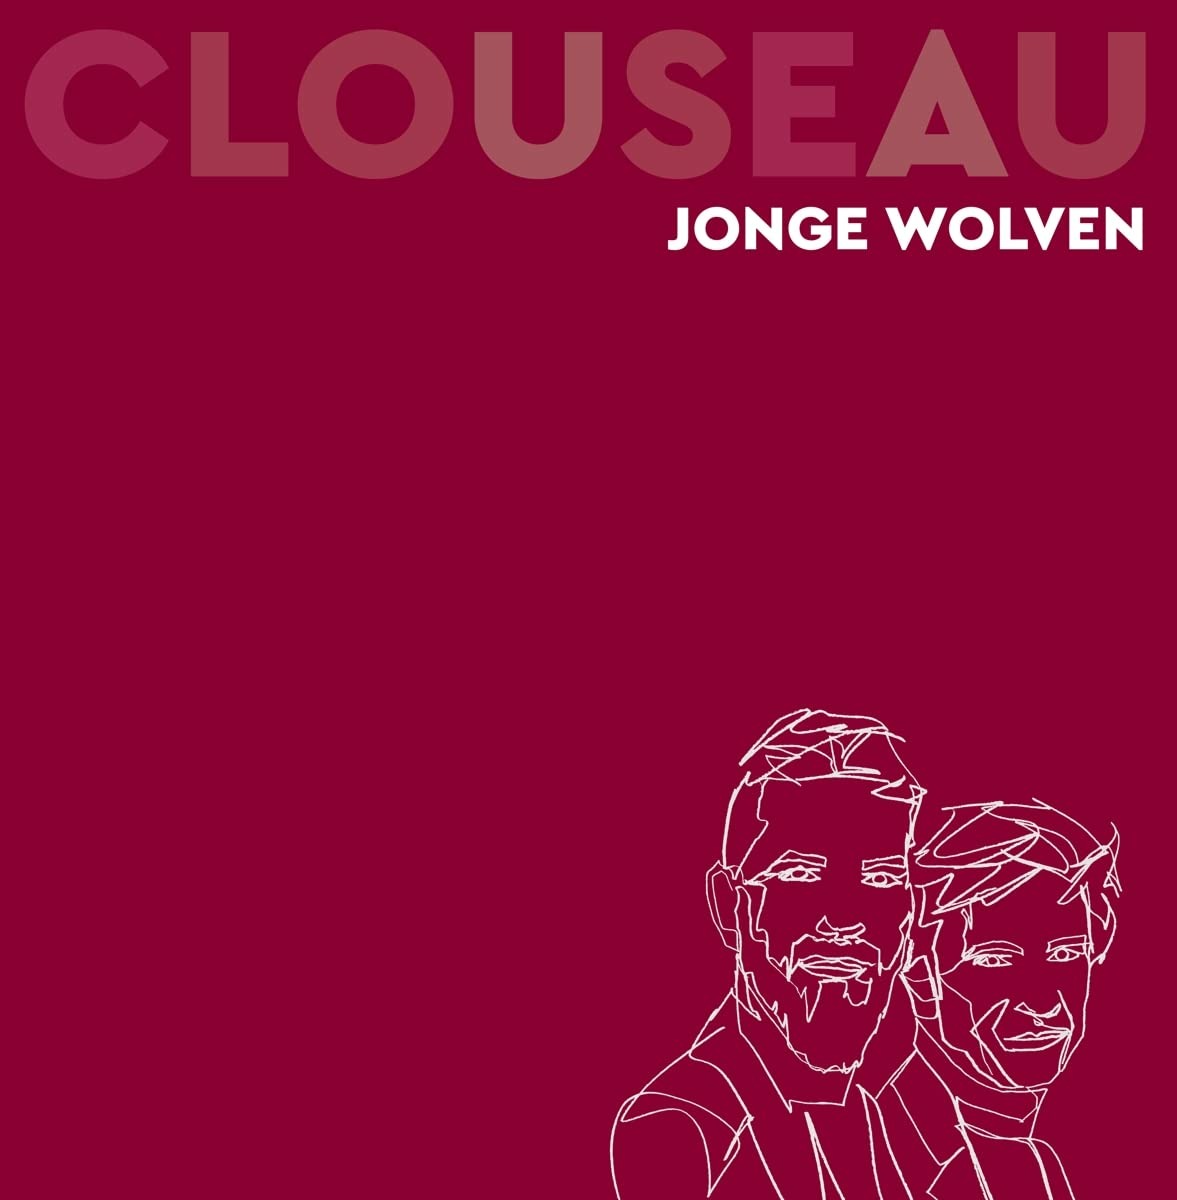 CLOUSEAU - JONGE WOLVEN, Vinyl